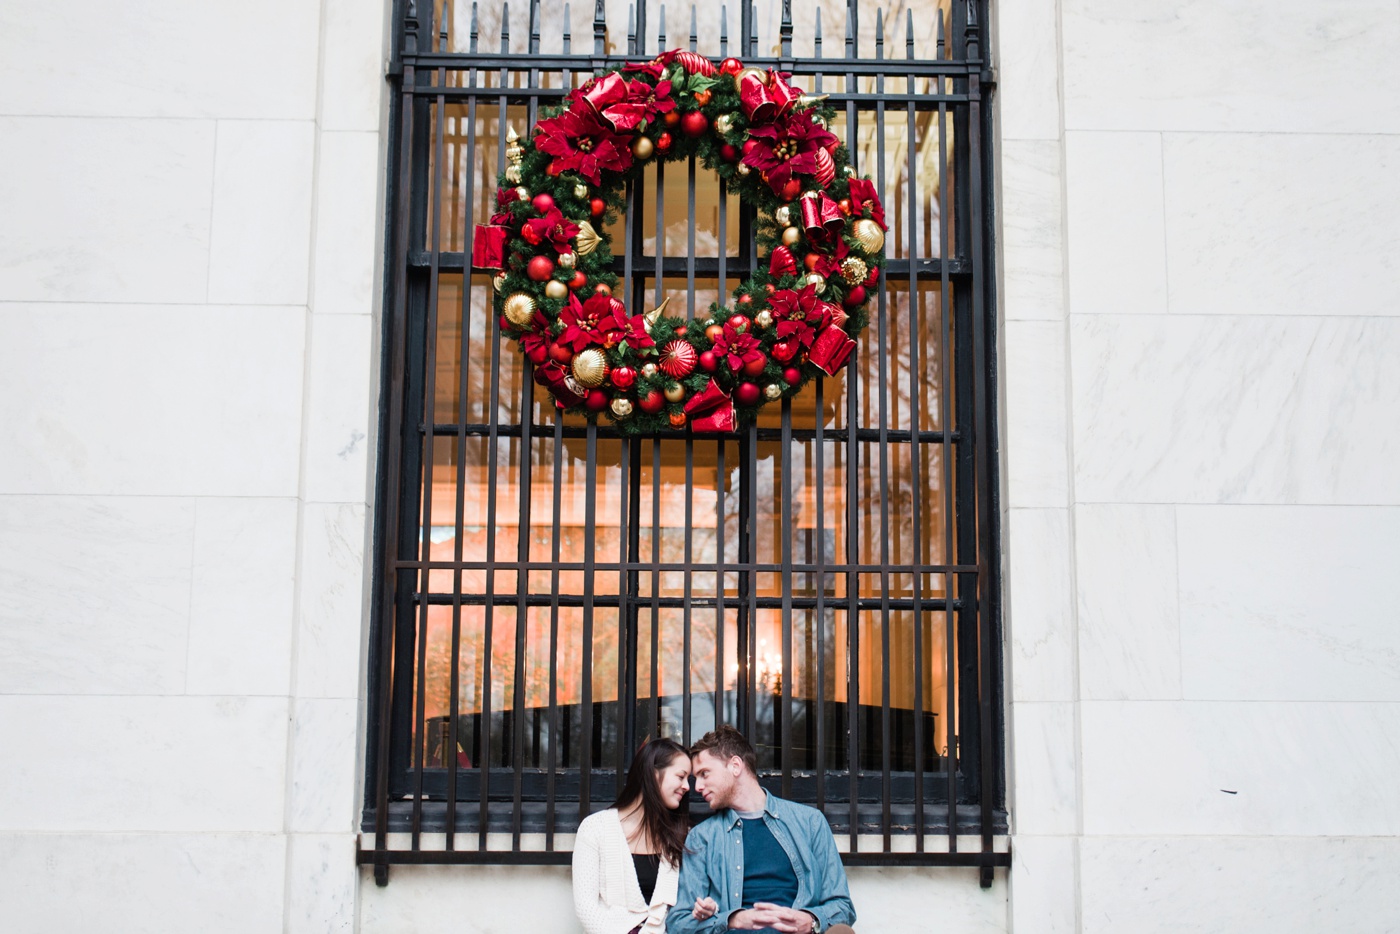 Matt + Liz - Old City Engagement Session - Philadelpha Wedding Photographer - Alison Dunn Photography photo